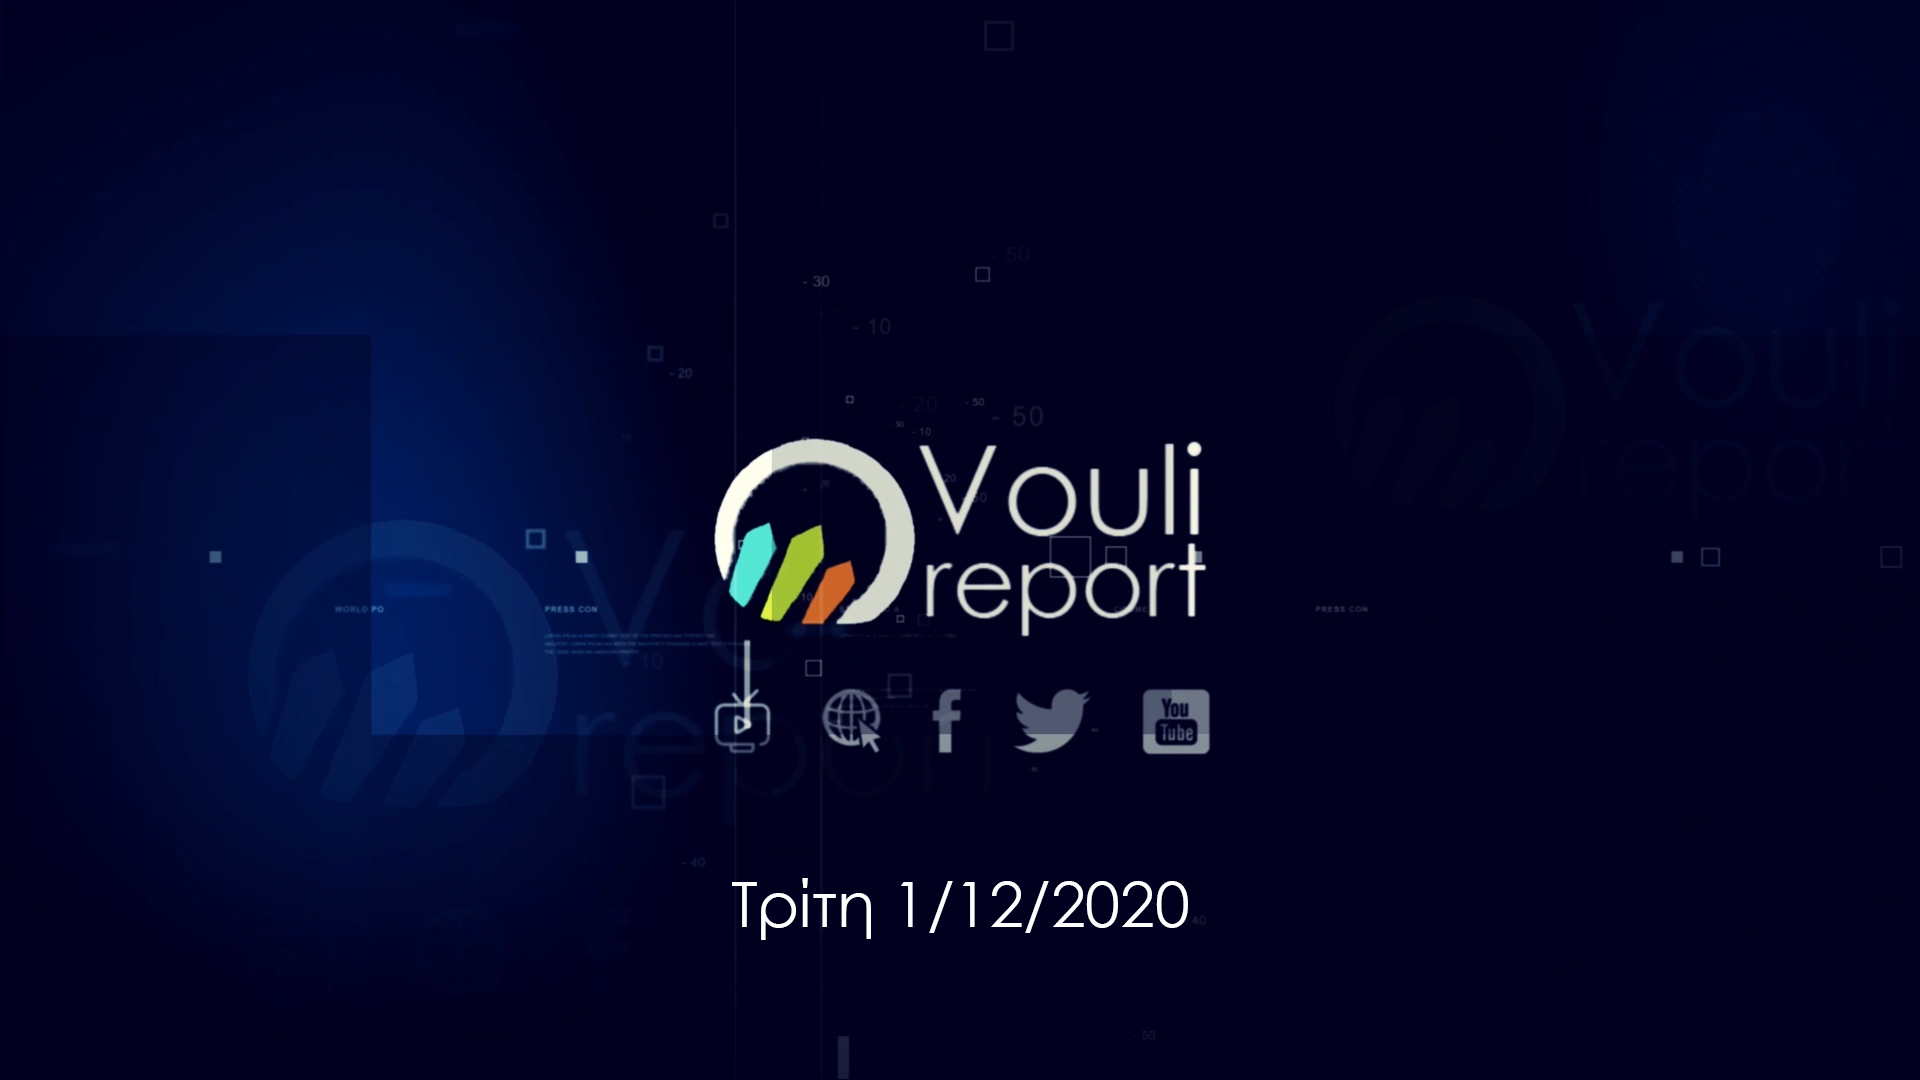 Vouli report | 01/12/2020